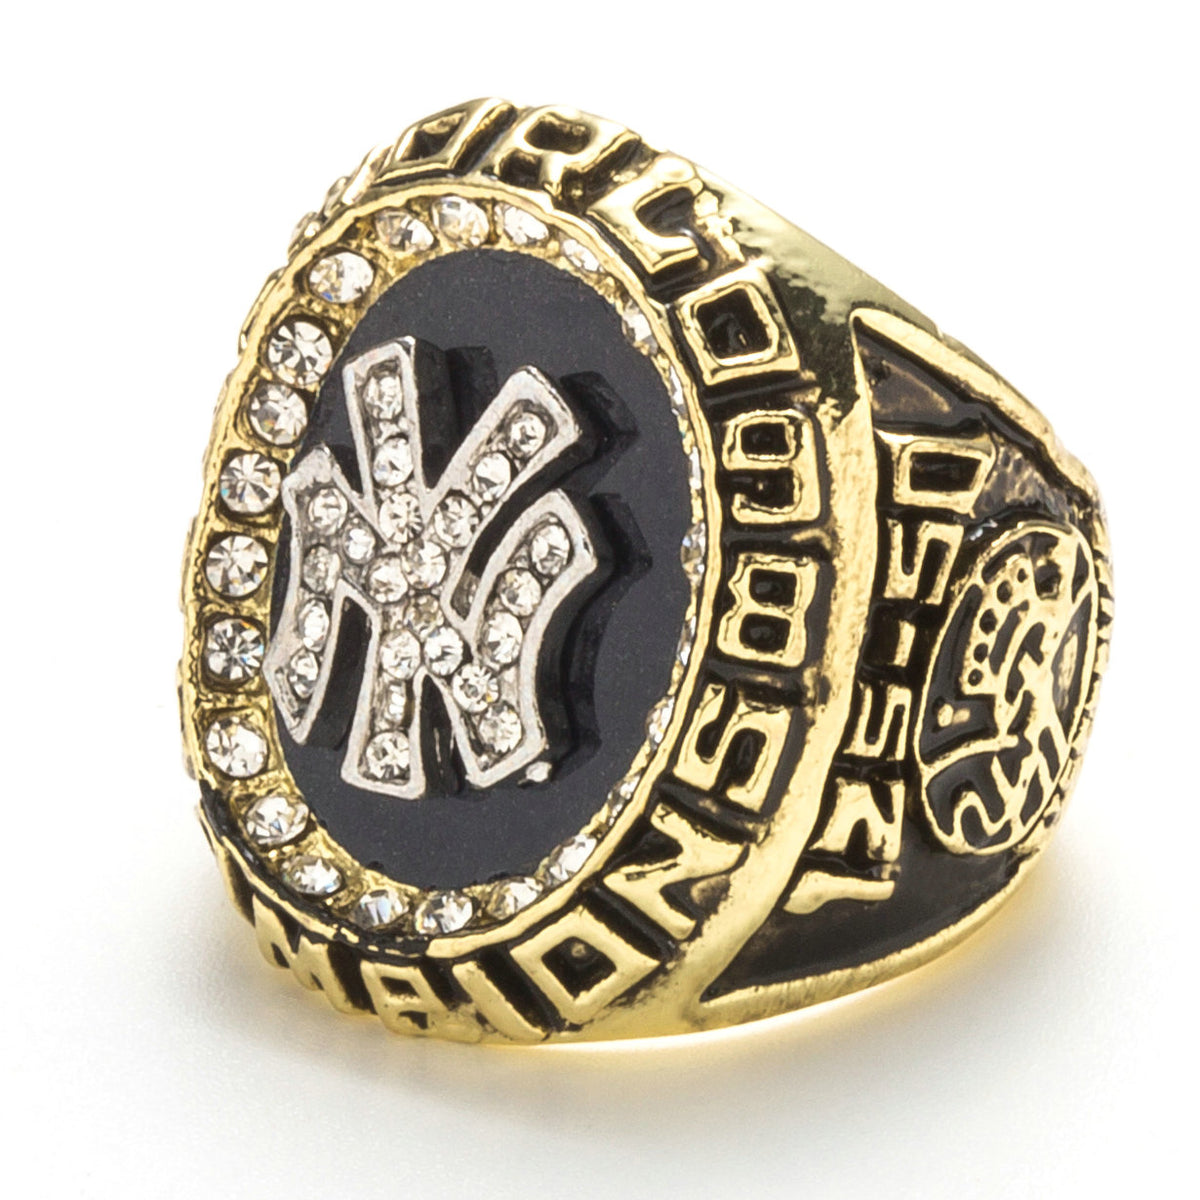 1998 Yankees SGA World Series Championship Replica Ring IN HAND 8/19/18  August